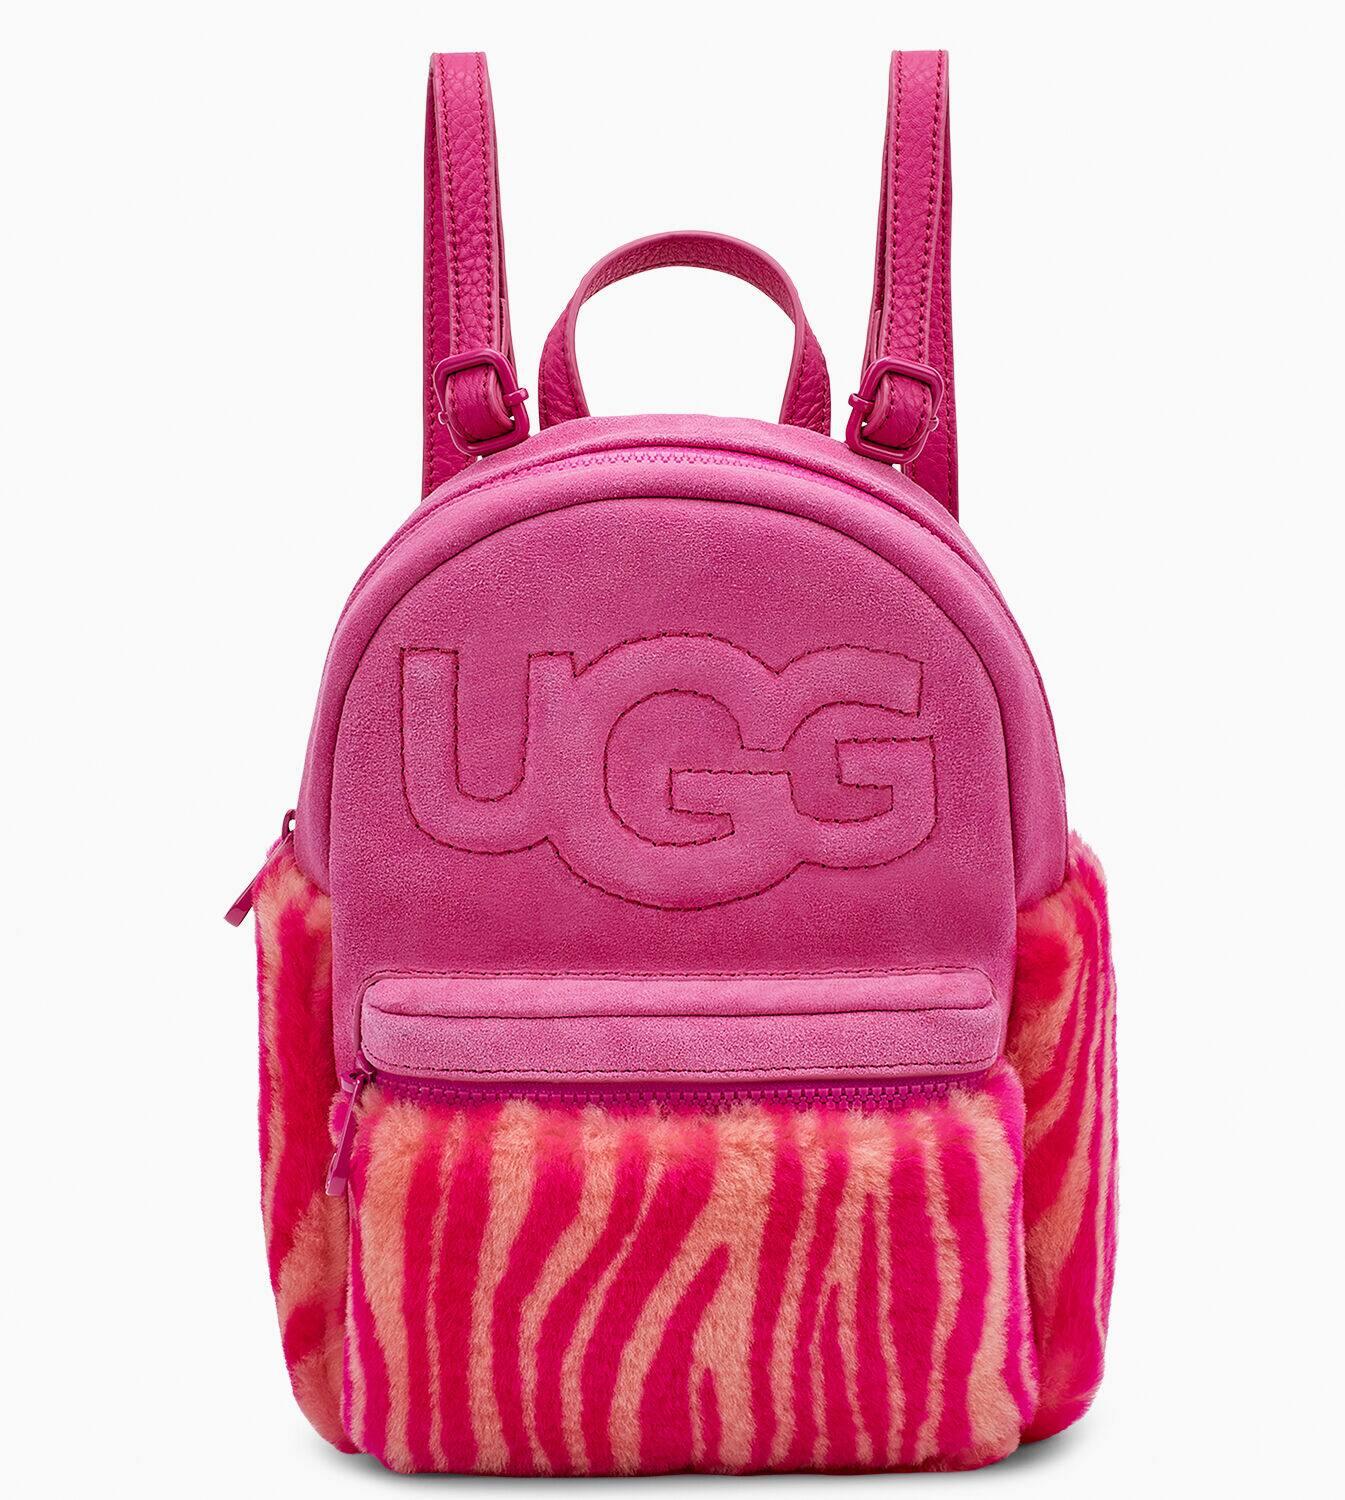 UGG Suede Dannie Ii Mini Backpack Sheepskin in Pink - Lyst